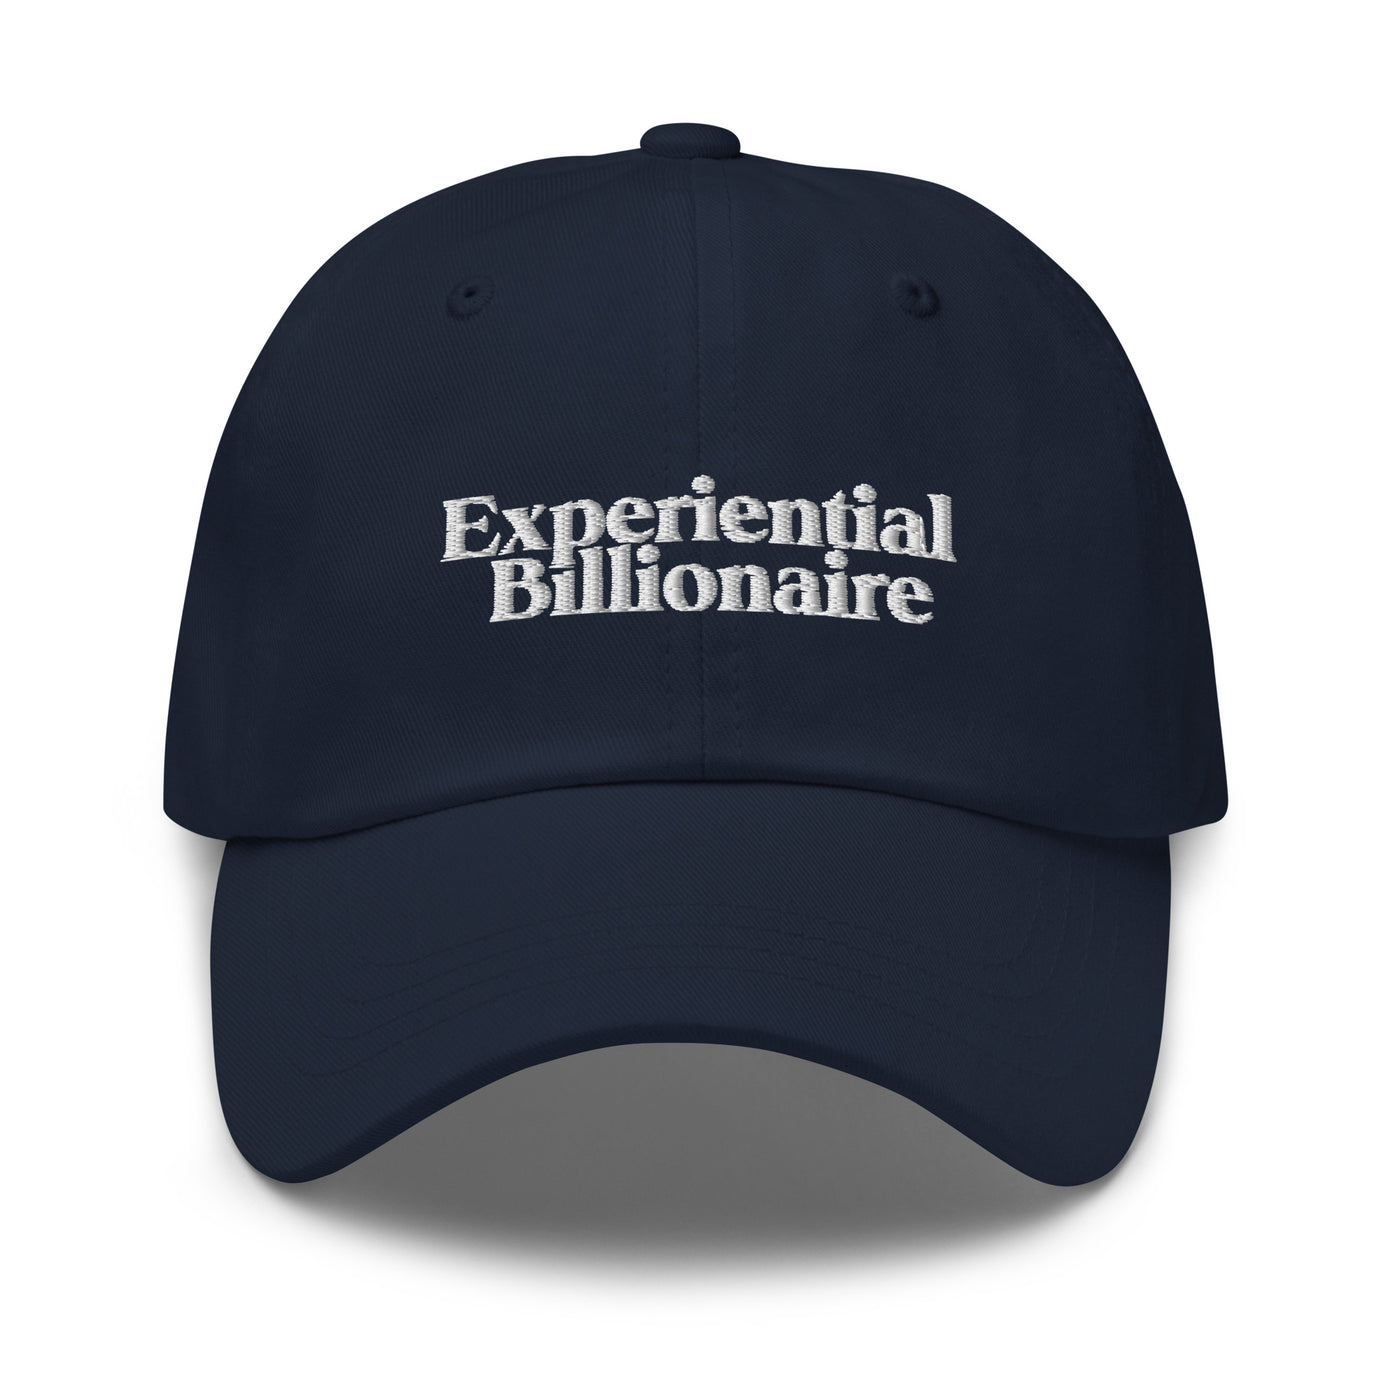 Experiential Billionaire Dad hat